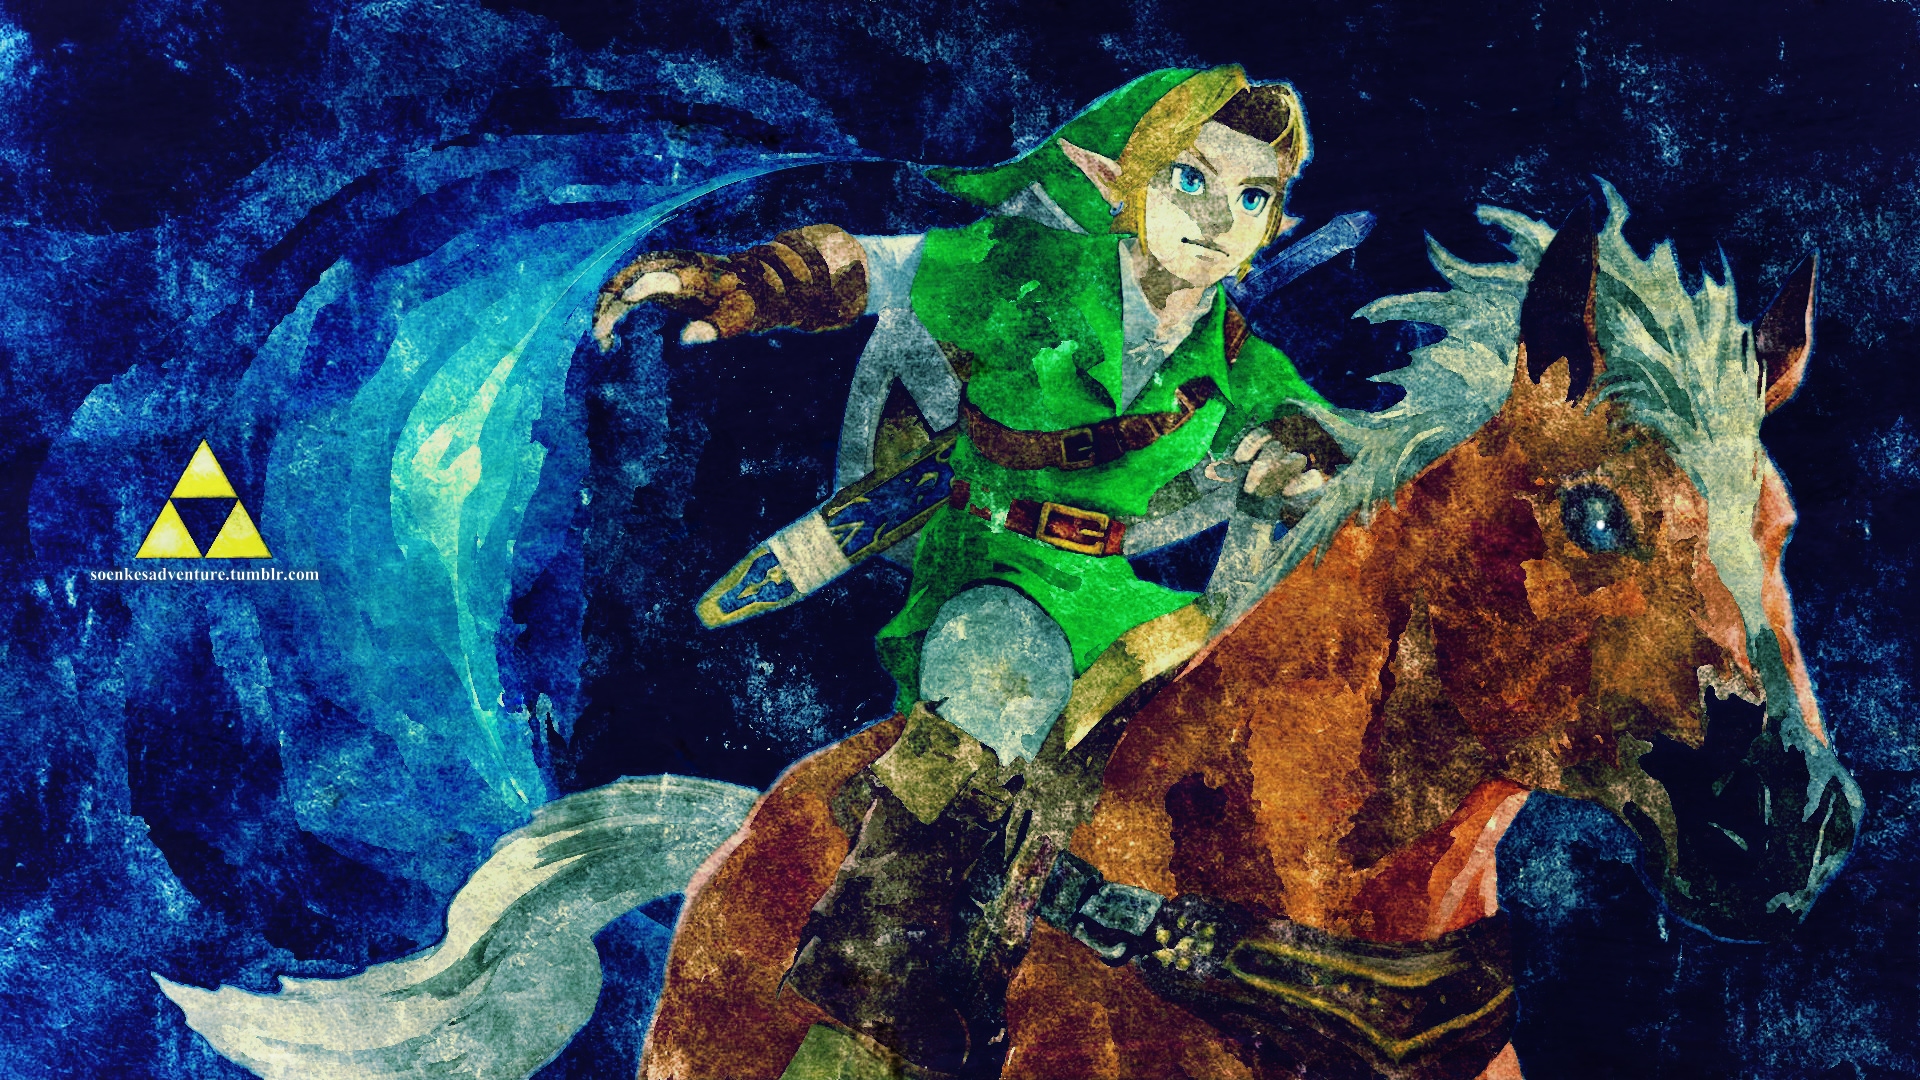 Link The Legend Ii Full HD Wallpaper By Soenkesadventure